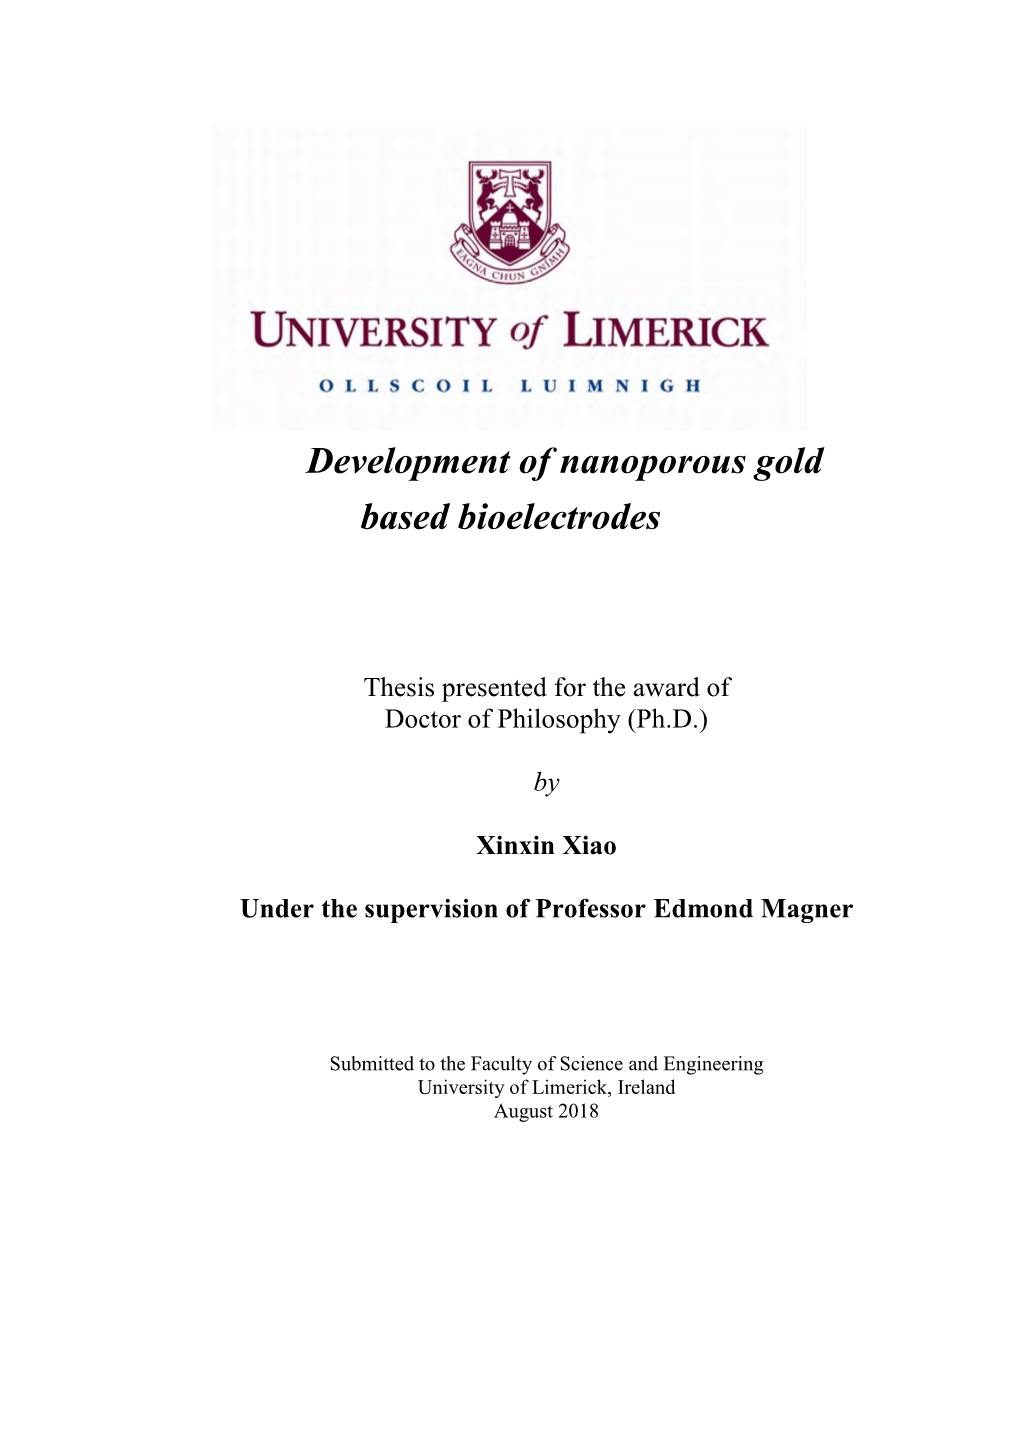 Development of Nanoporous Gold Based Bioelectrodes